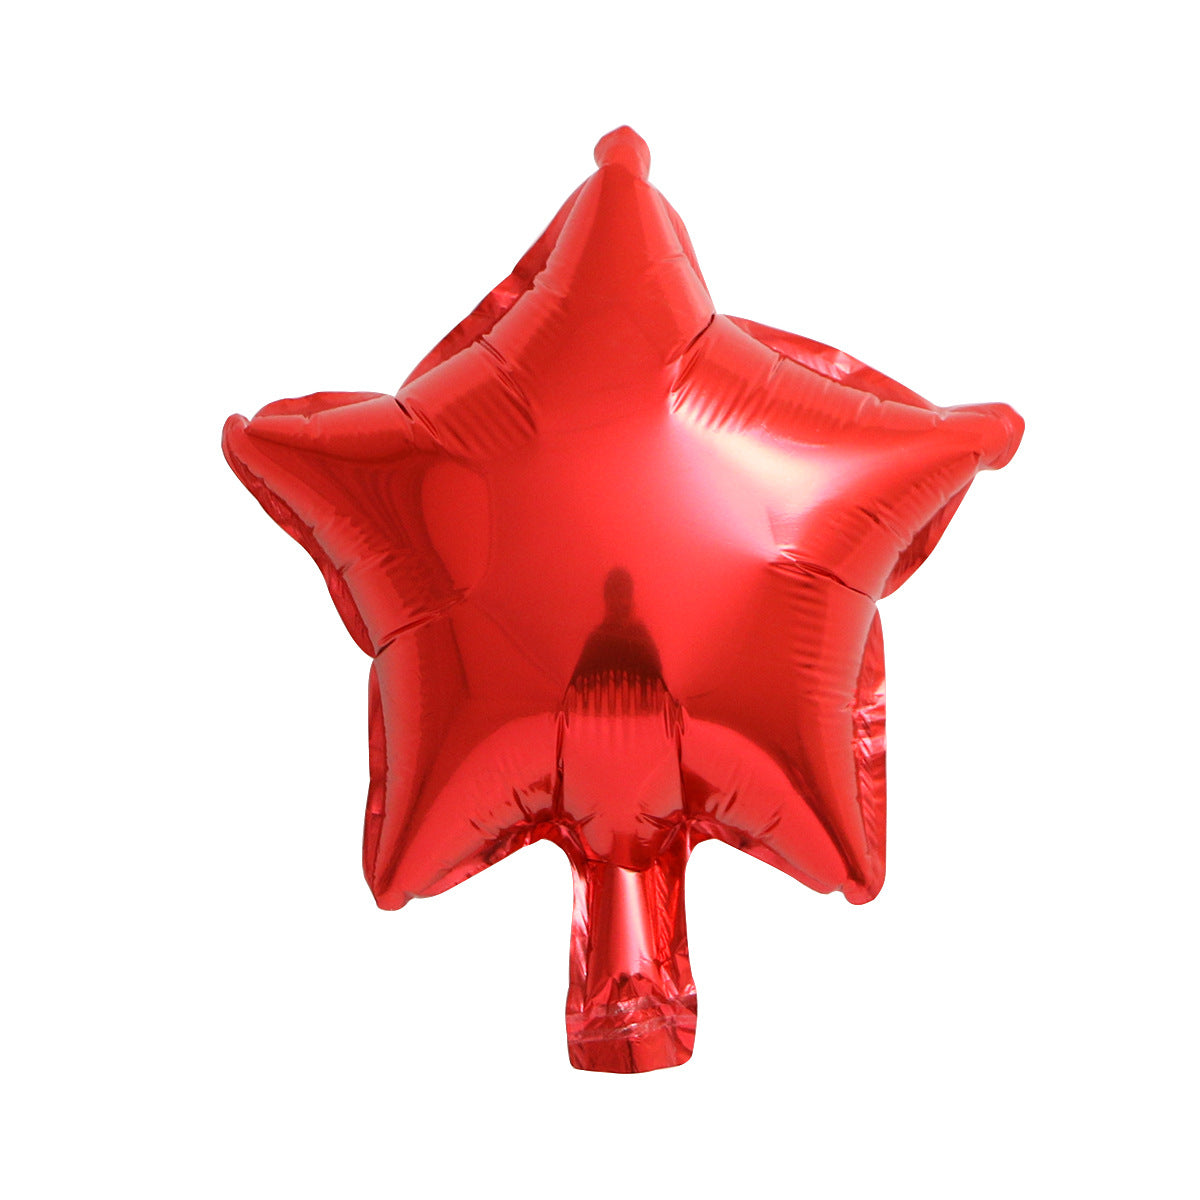 10" Red Star - 24cm DECORATIVE SHAPES soleystudio 490